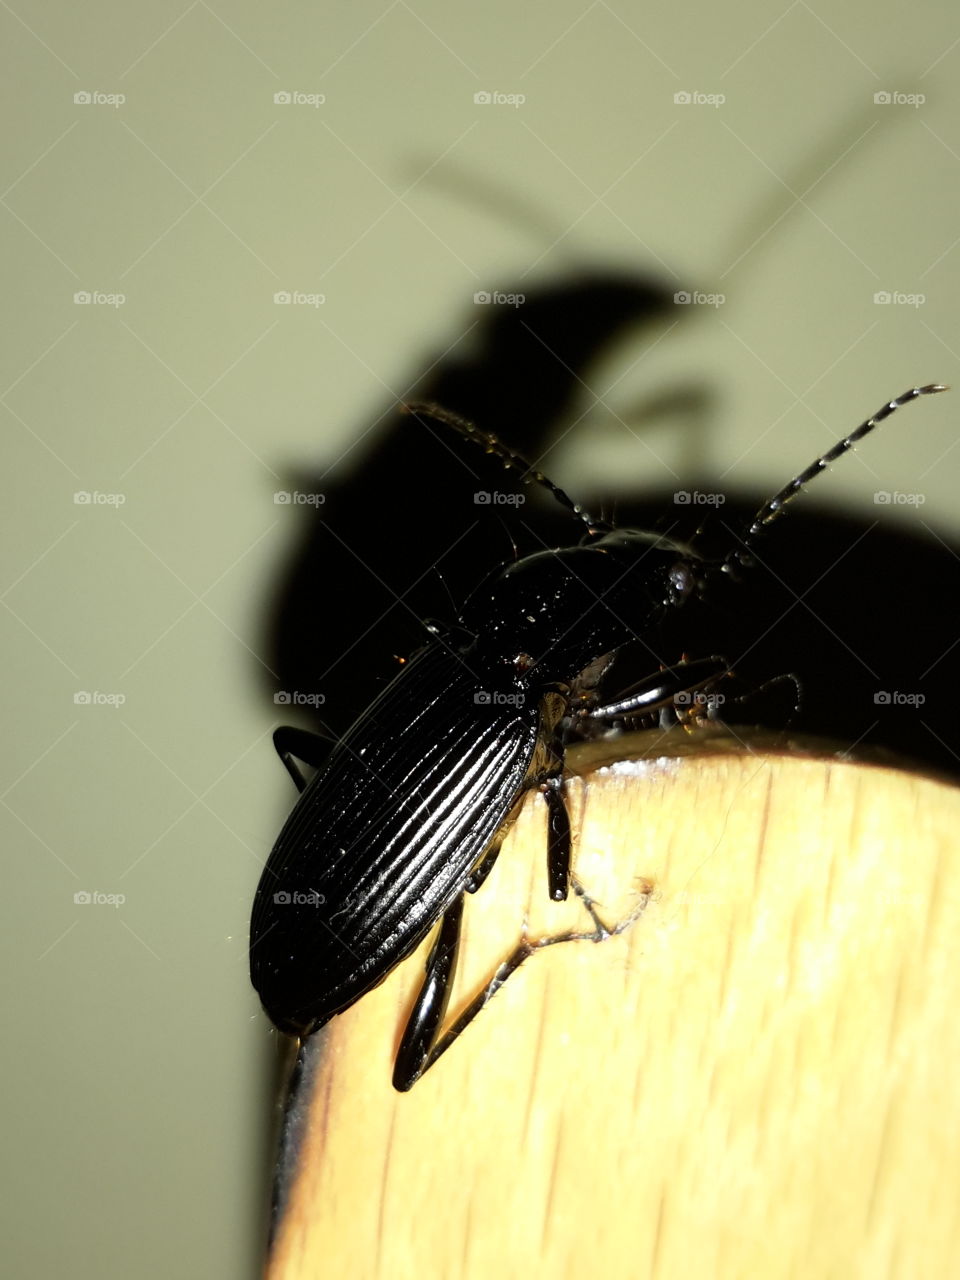 Black beetle came to visit